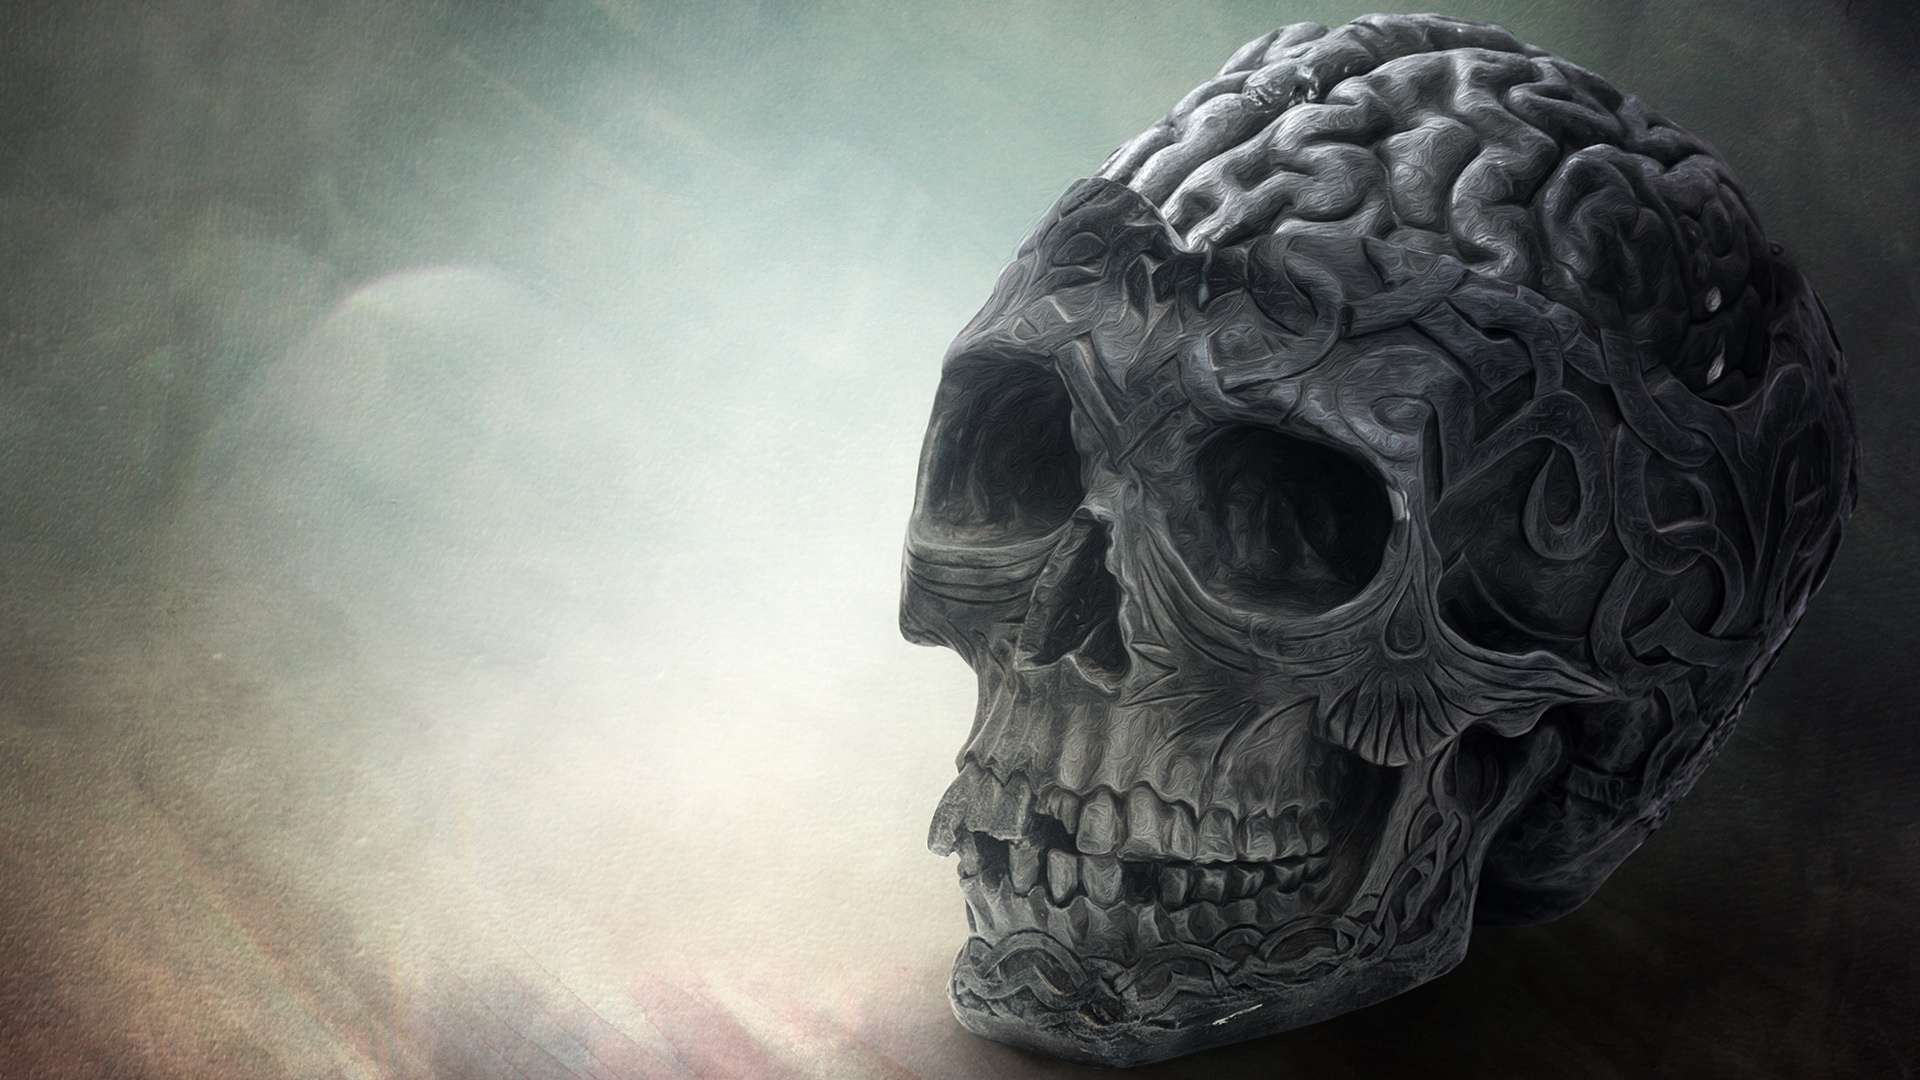 Now Brain Skull HD Wallpaper 1080p Read Description Info S